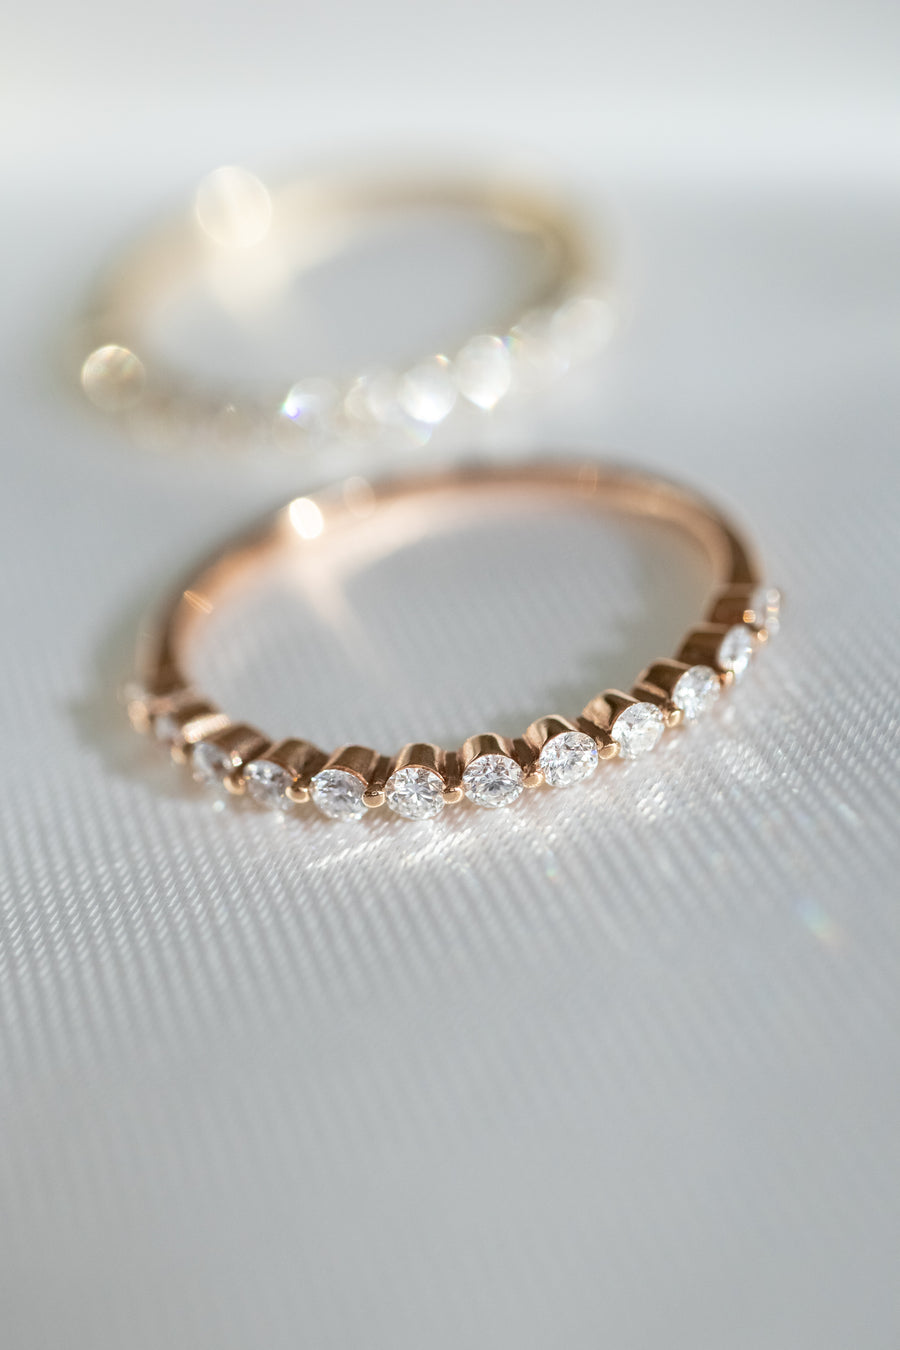 D-E colour, VS Clarity, total ~0.24carat Round Brilliant Top Quality Diamonds 14K/18K Gold Half Eternity Ring